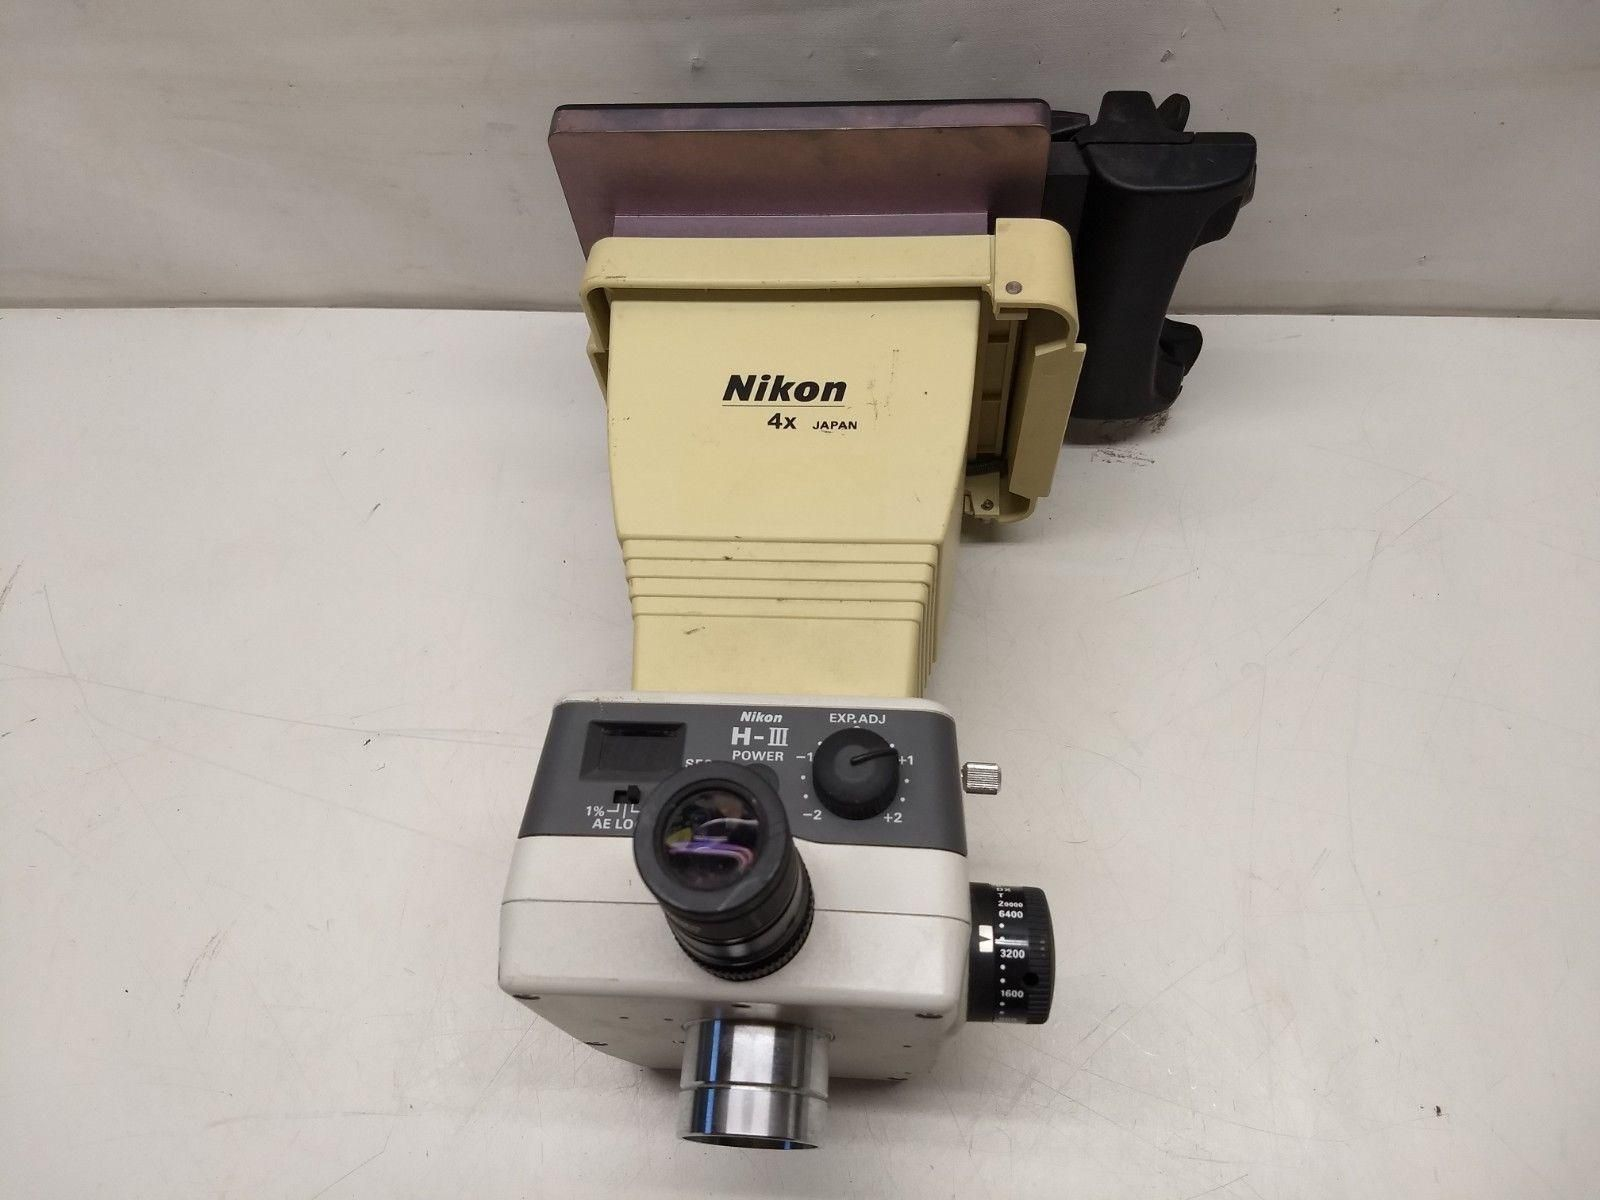 Nikon H-III Power Microscope Lens